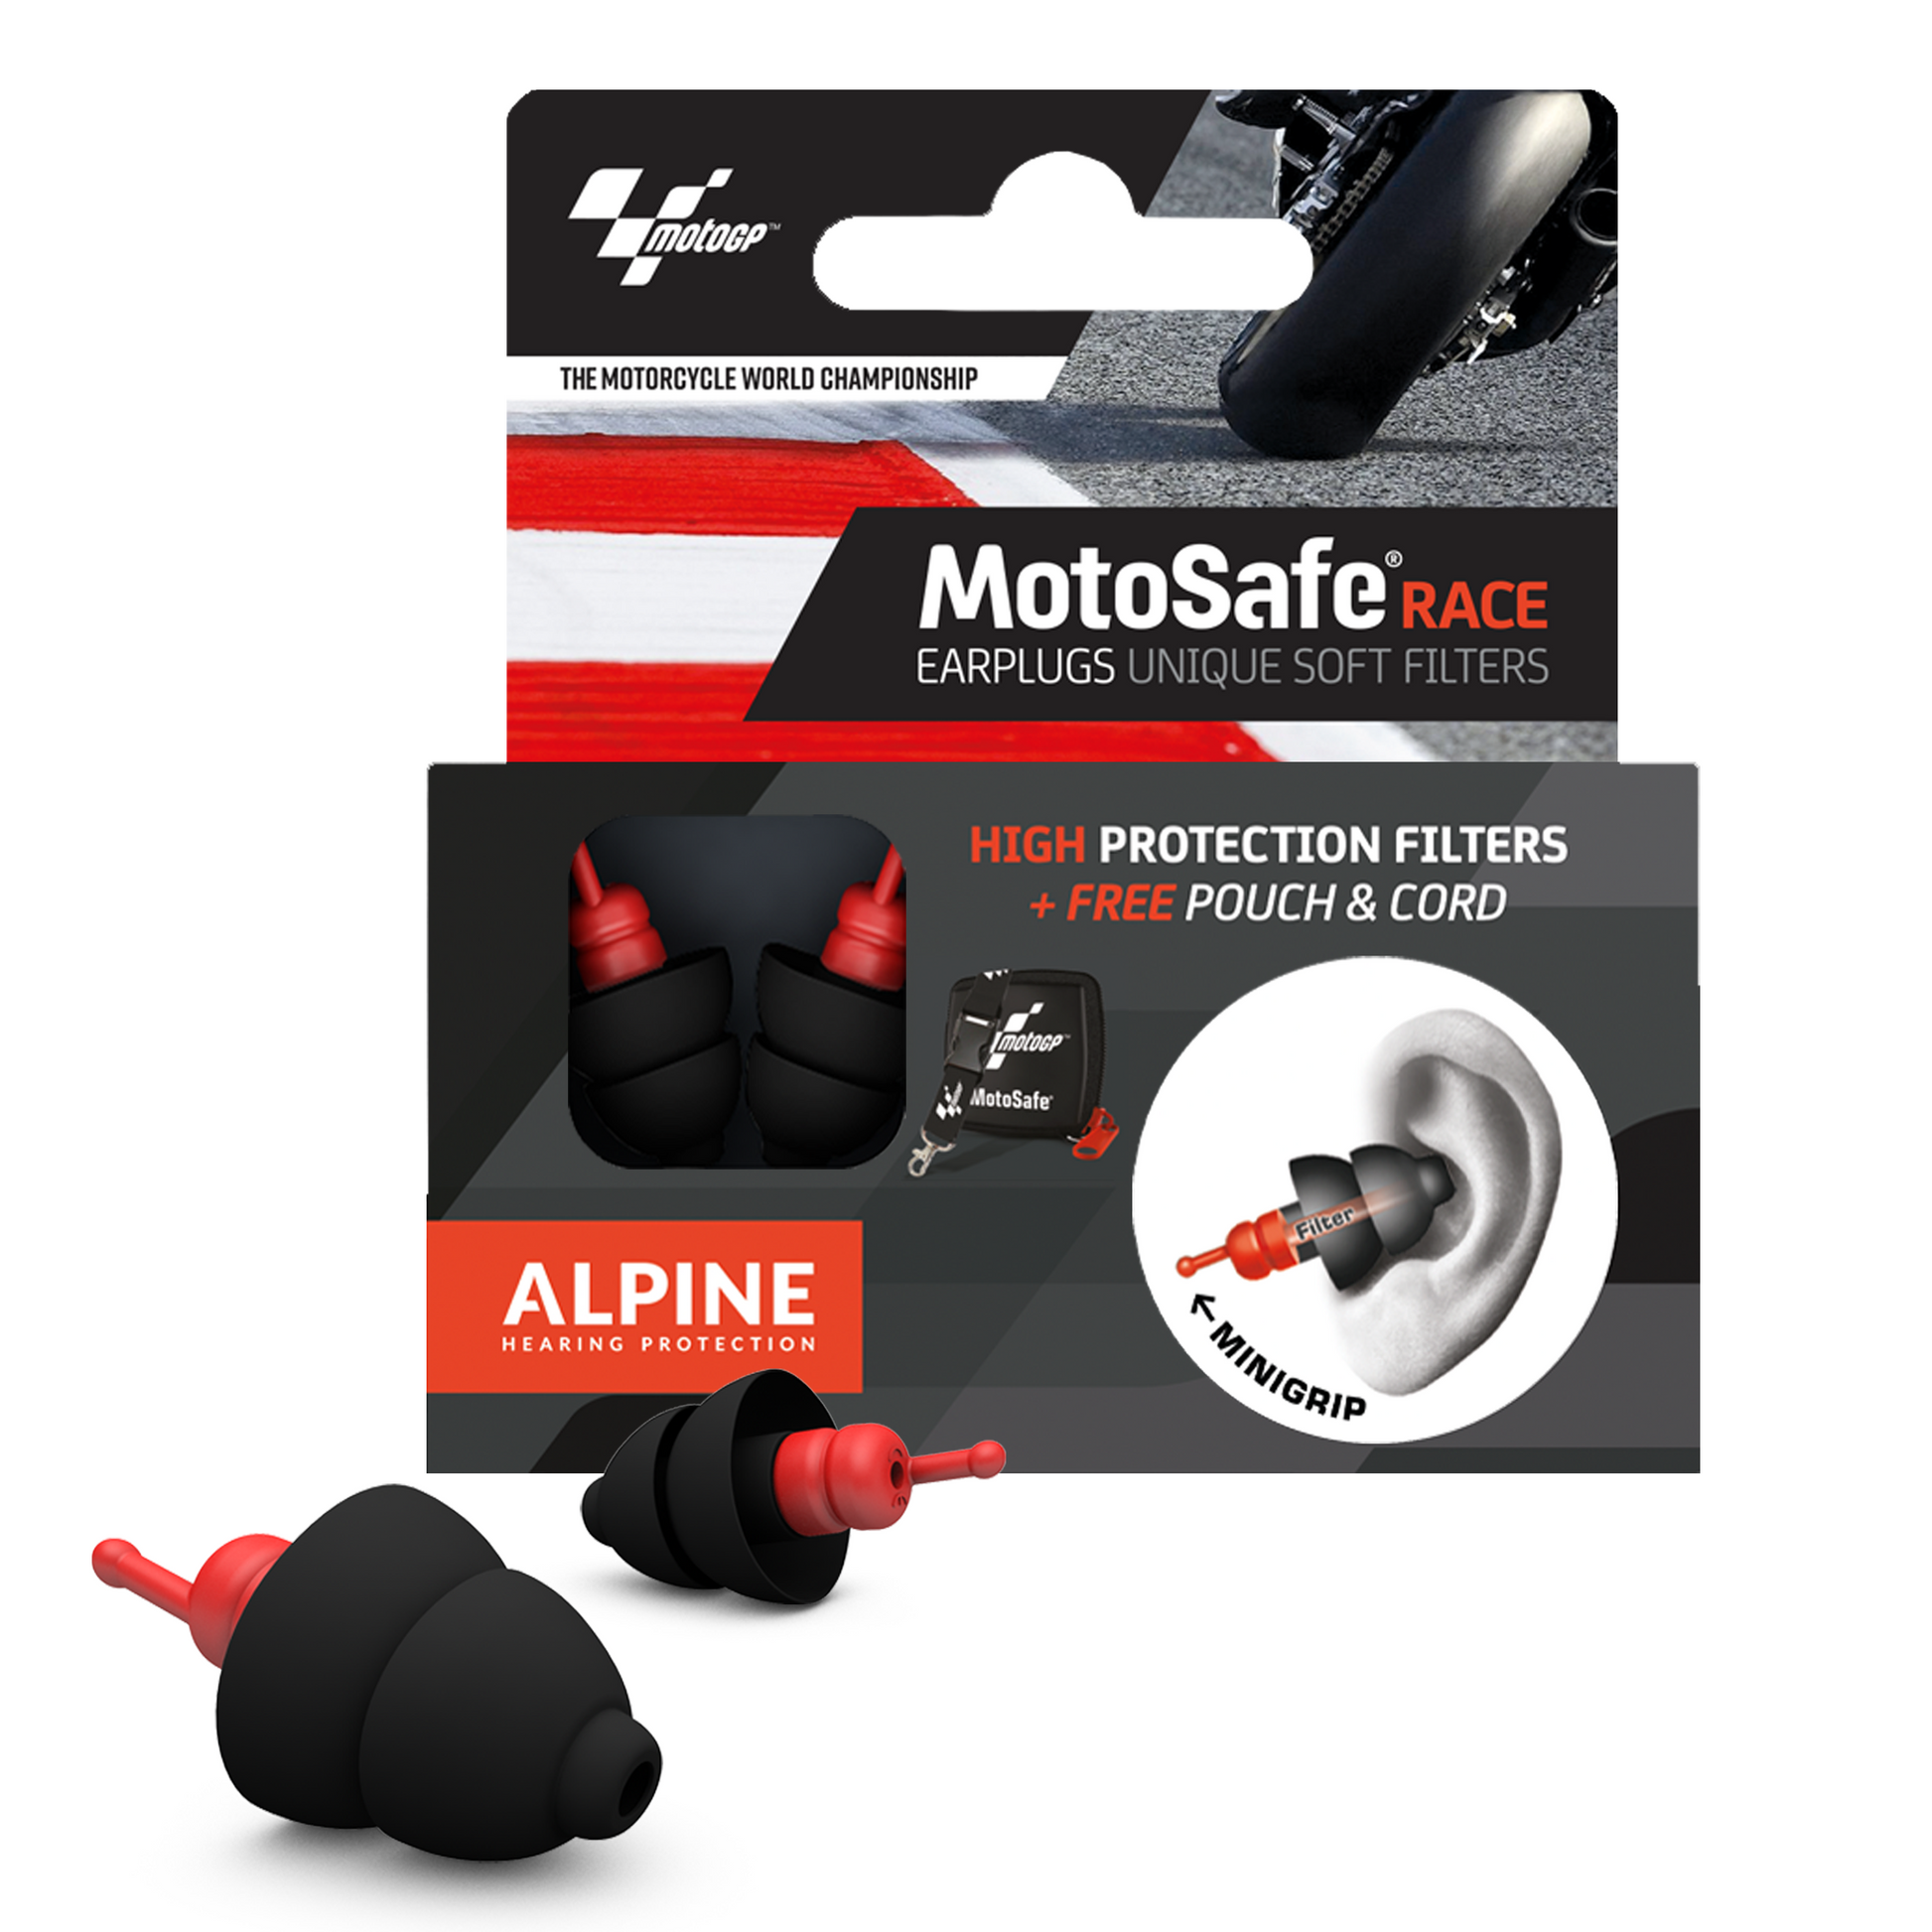 MotoSafe Race – Official MotoGP Edition Alpine hearing protection Kapselgehörschutz Ohrstöpsel Schützen Sie Ihr Ohr red dot award motorrad MotoSafe Pro MotoSafe Race MotoSafe Tour MotoSafe Race MotoSafe Race – Official MotoGP Edition unterwegs reisen MotoGP  